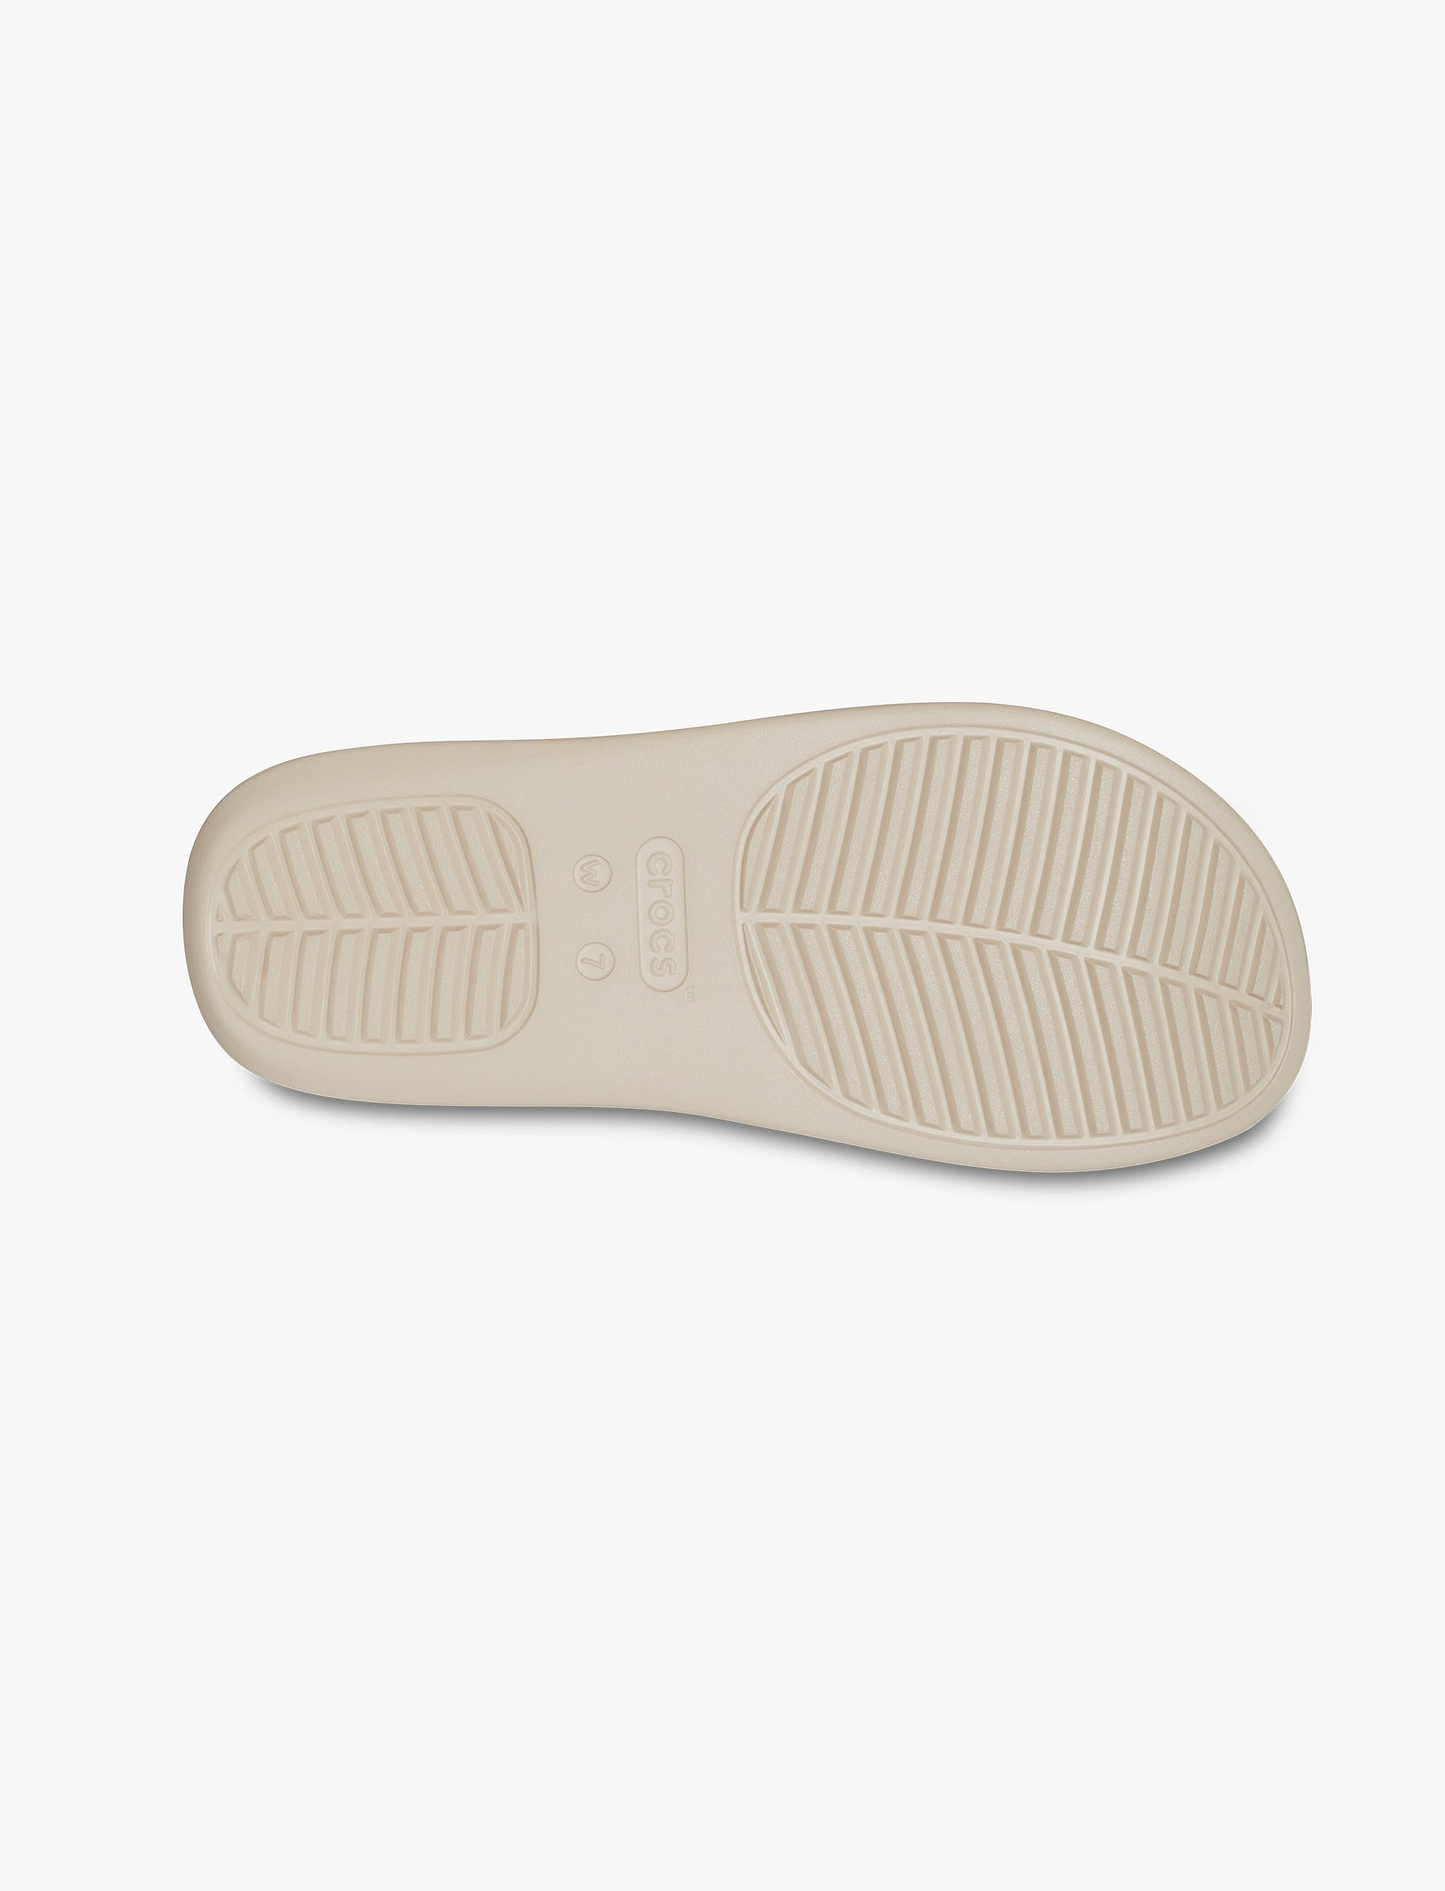 Crocs Getaway Platform Flip - כפכפי אצבע פלטפורמה קרוקס לנשים